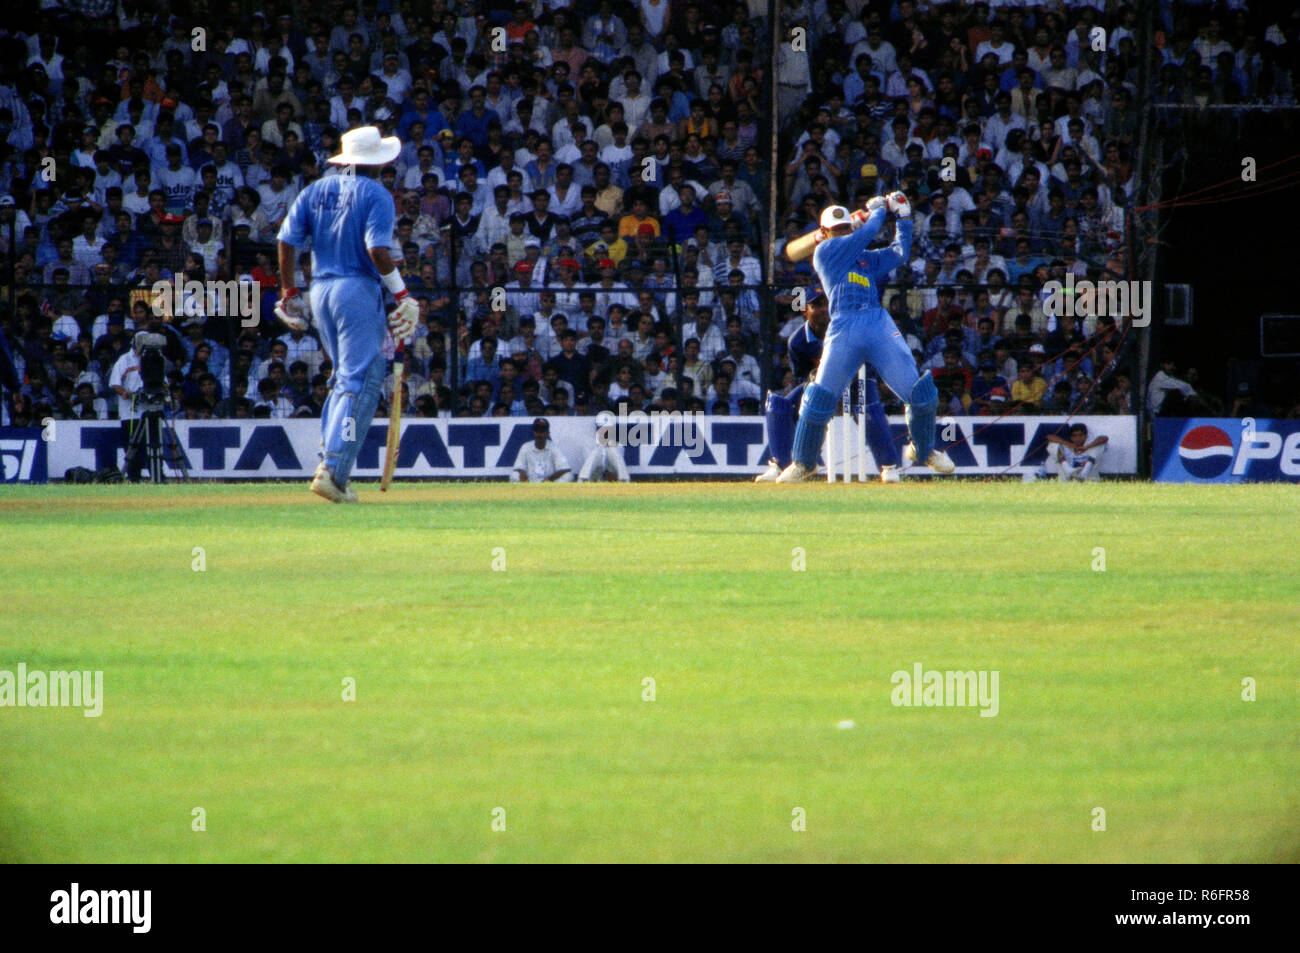 indian cricketers playing ODI cricket match, india Stock Photo